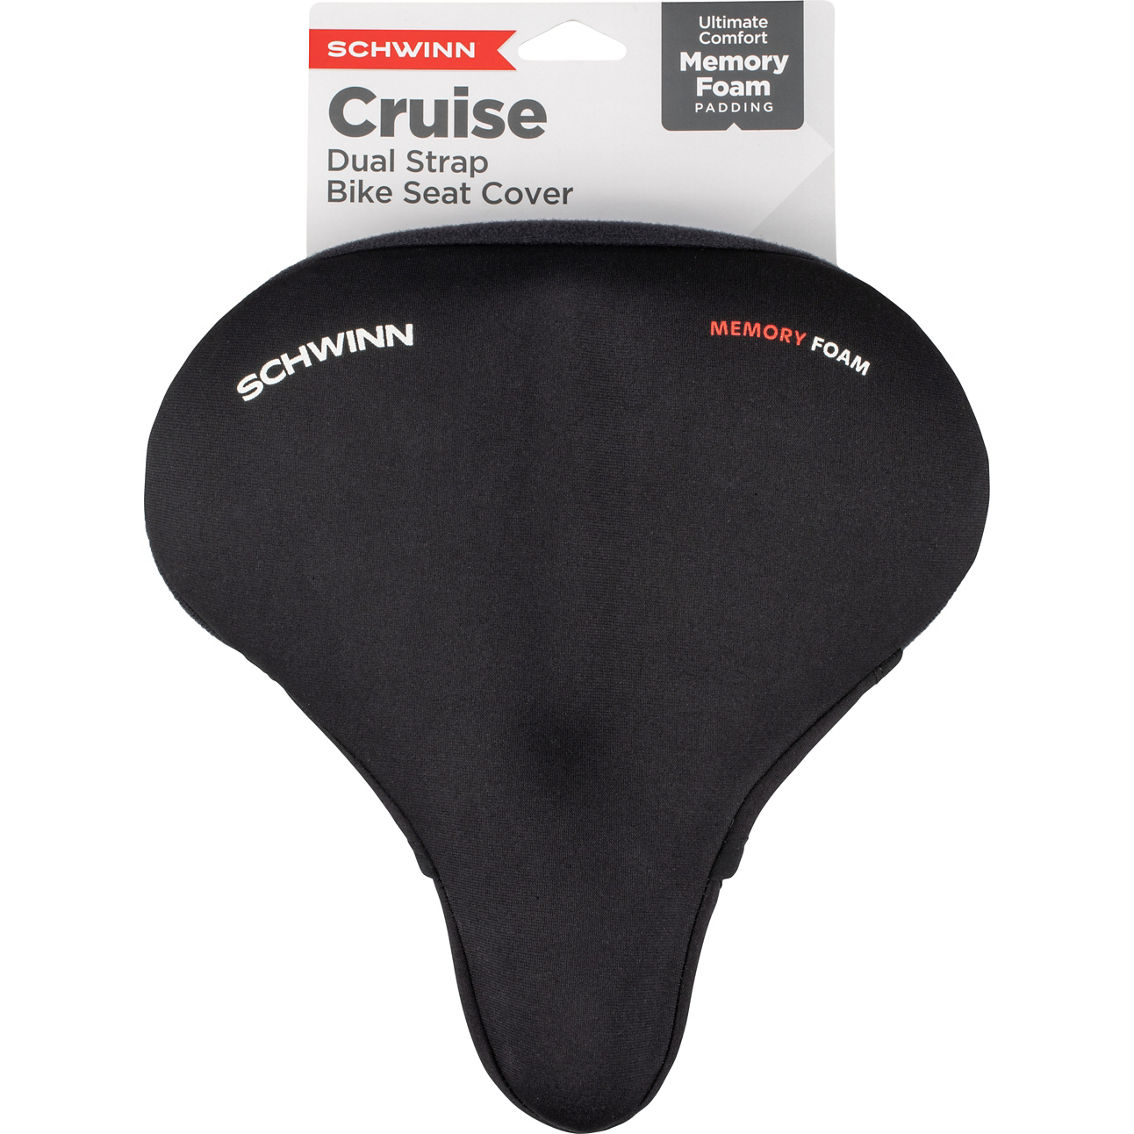 Schwinn Cruise Memory Foam Dual Strap Bike Seat Cover - Image 1 of 7